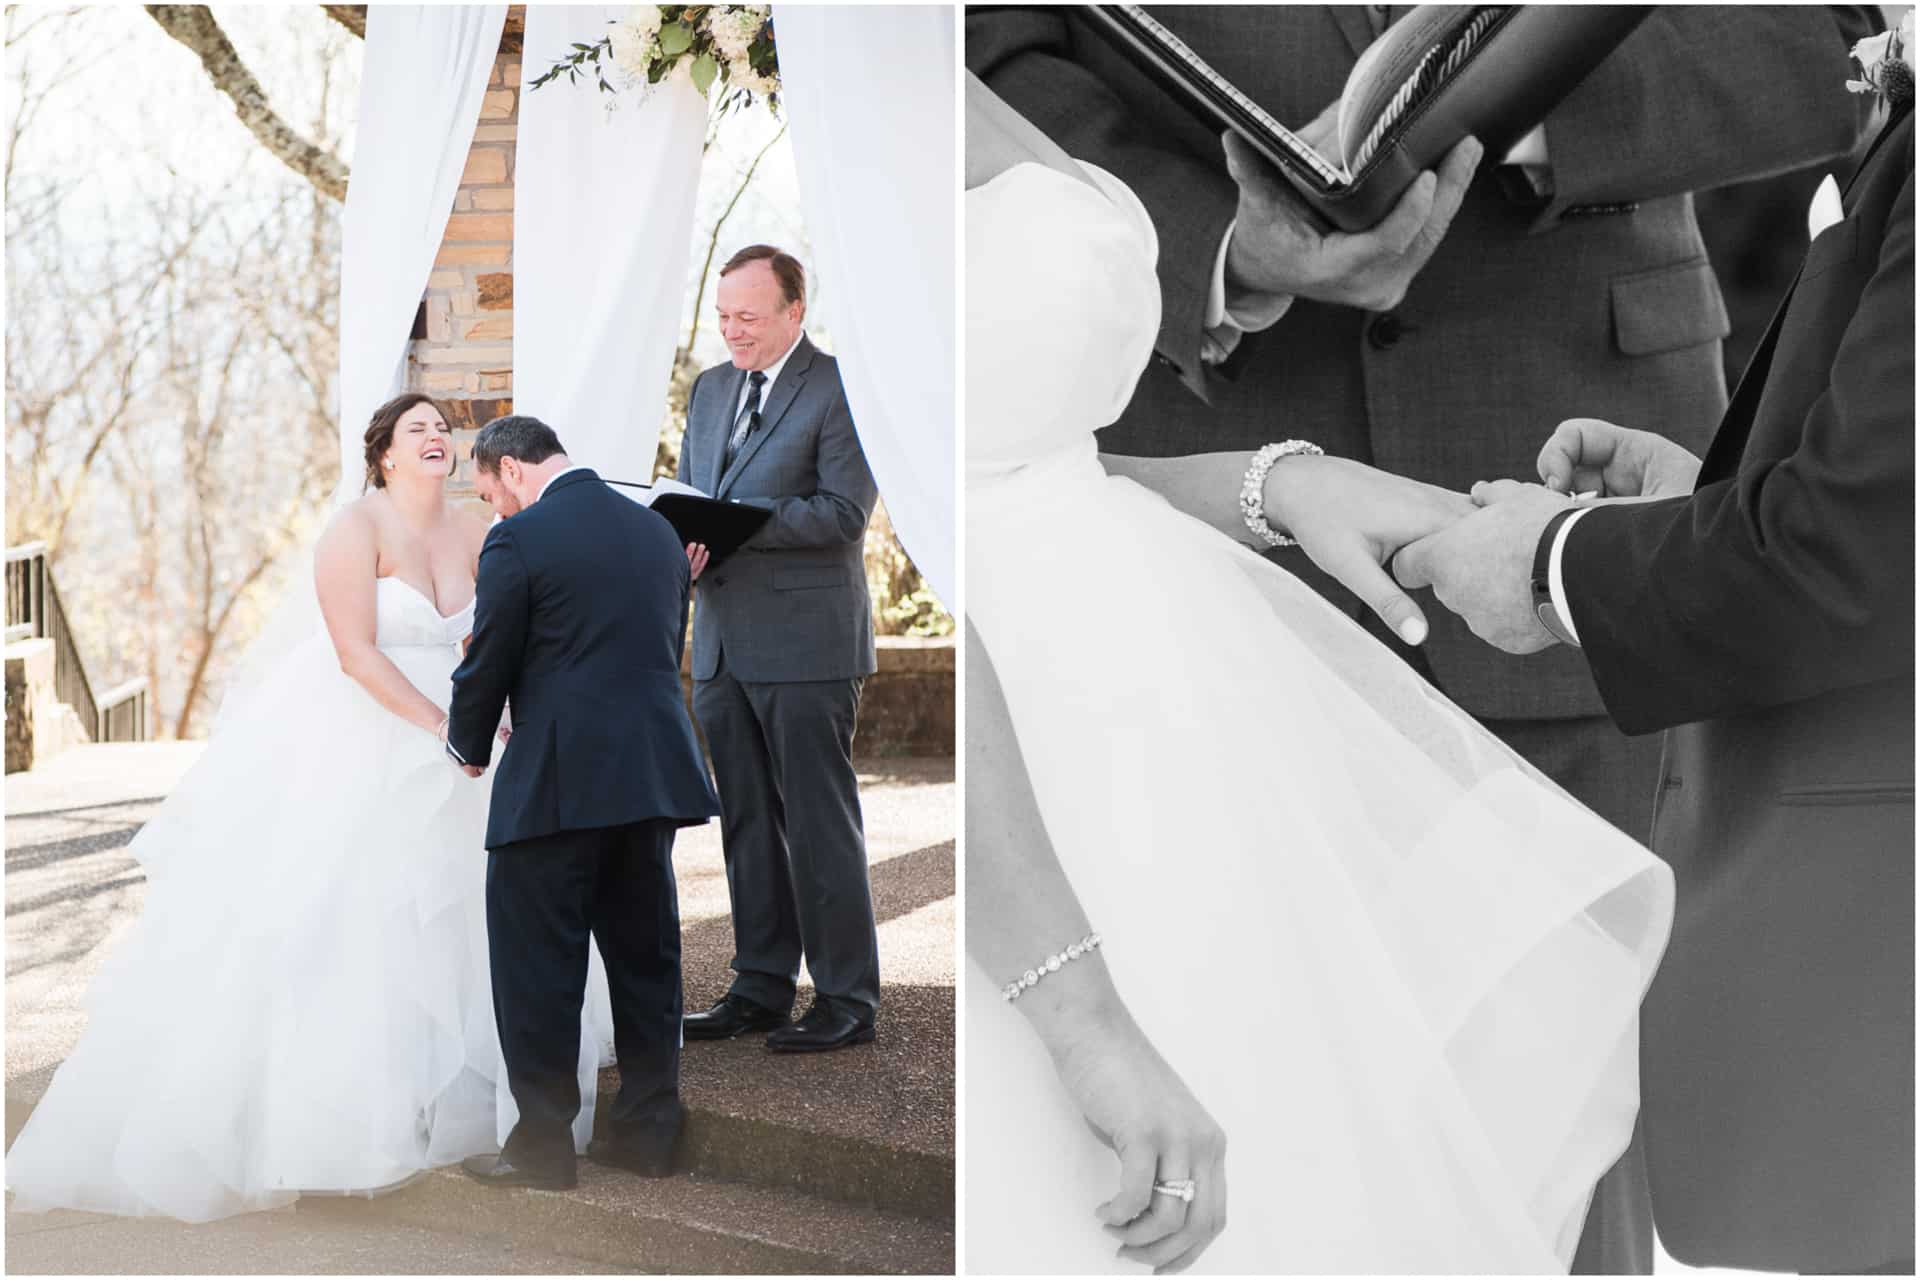 21 Burritt On The Mountain Winter Wedding Gazebo Ceremony Vows Exchanging Rings